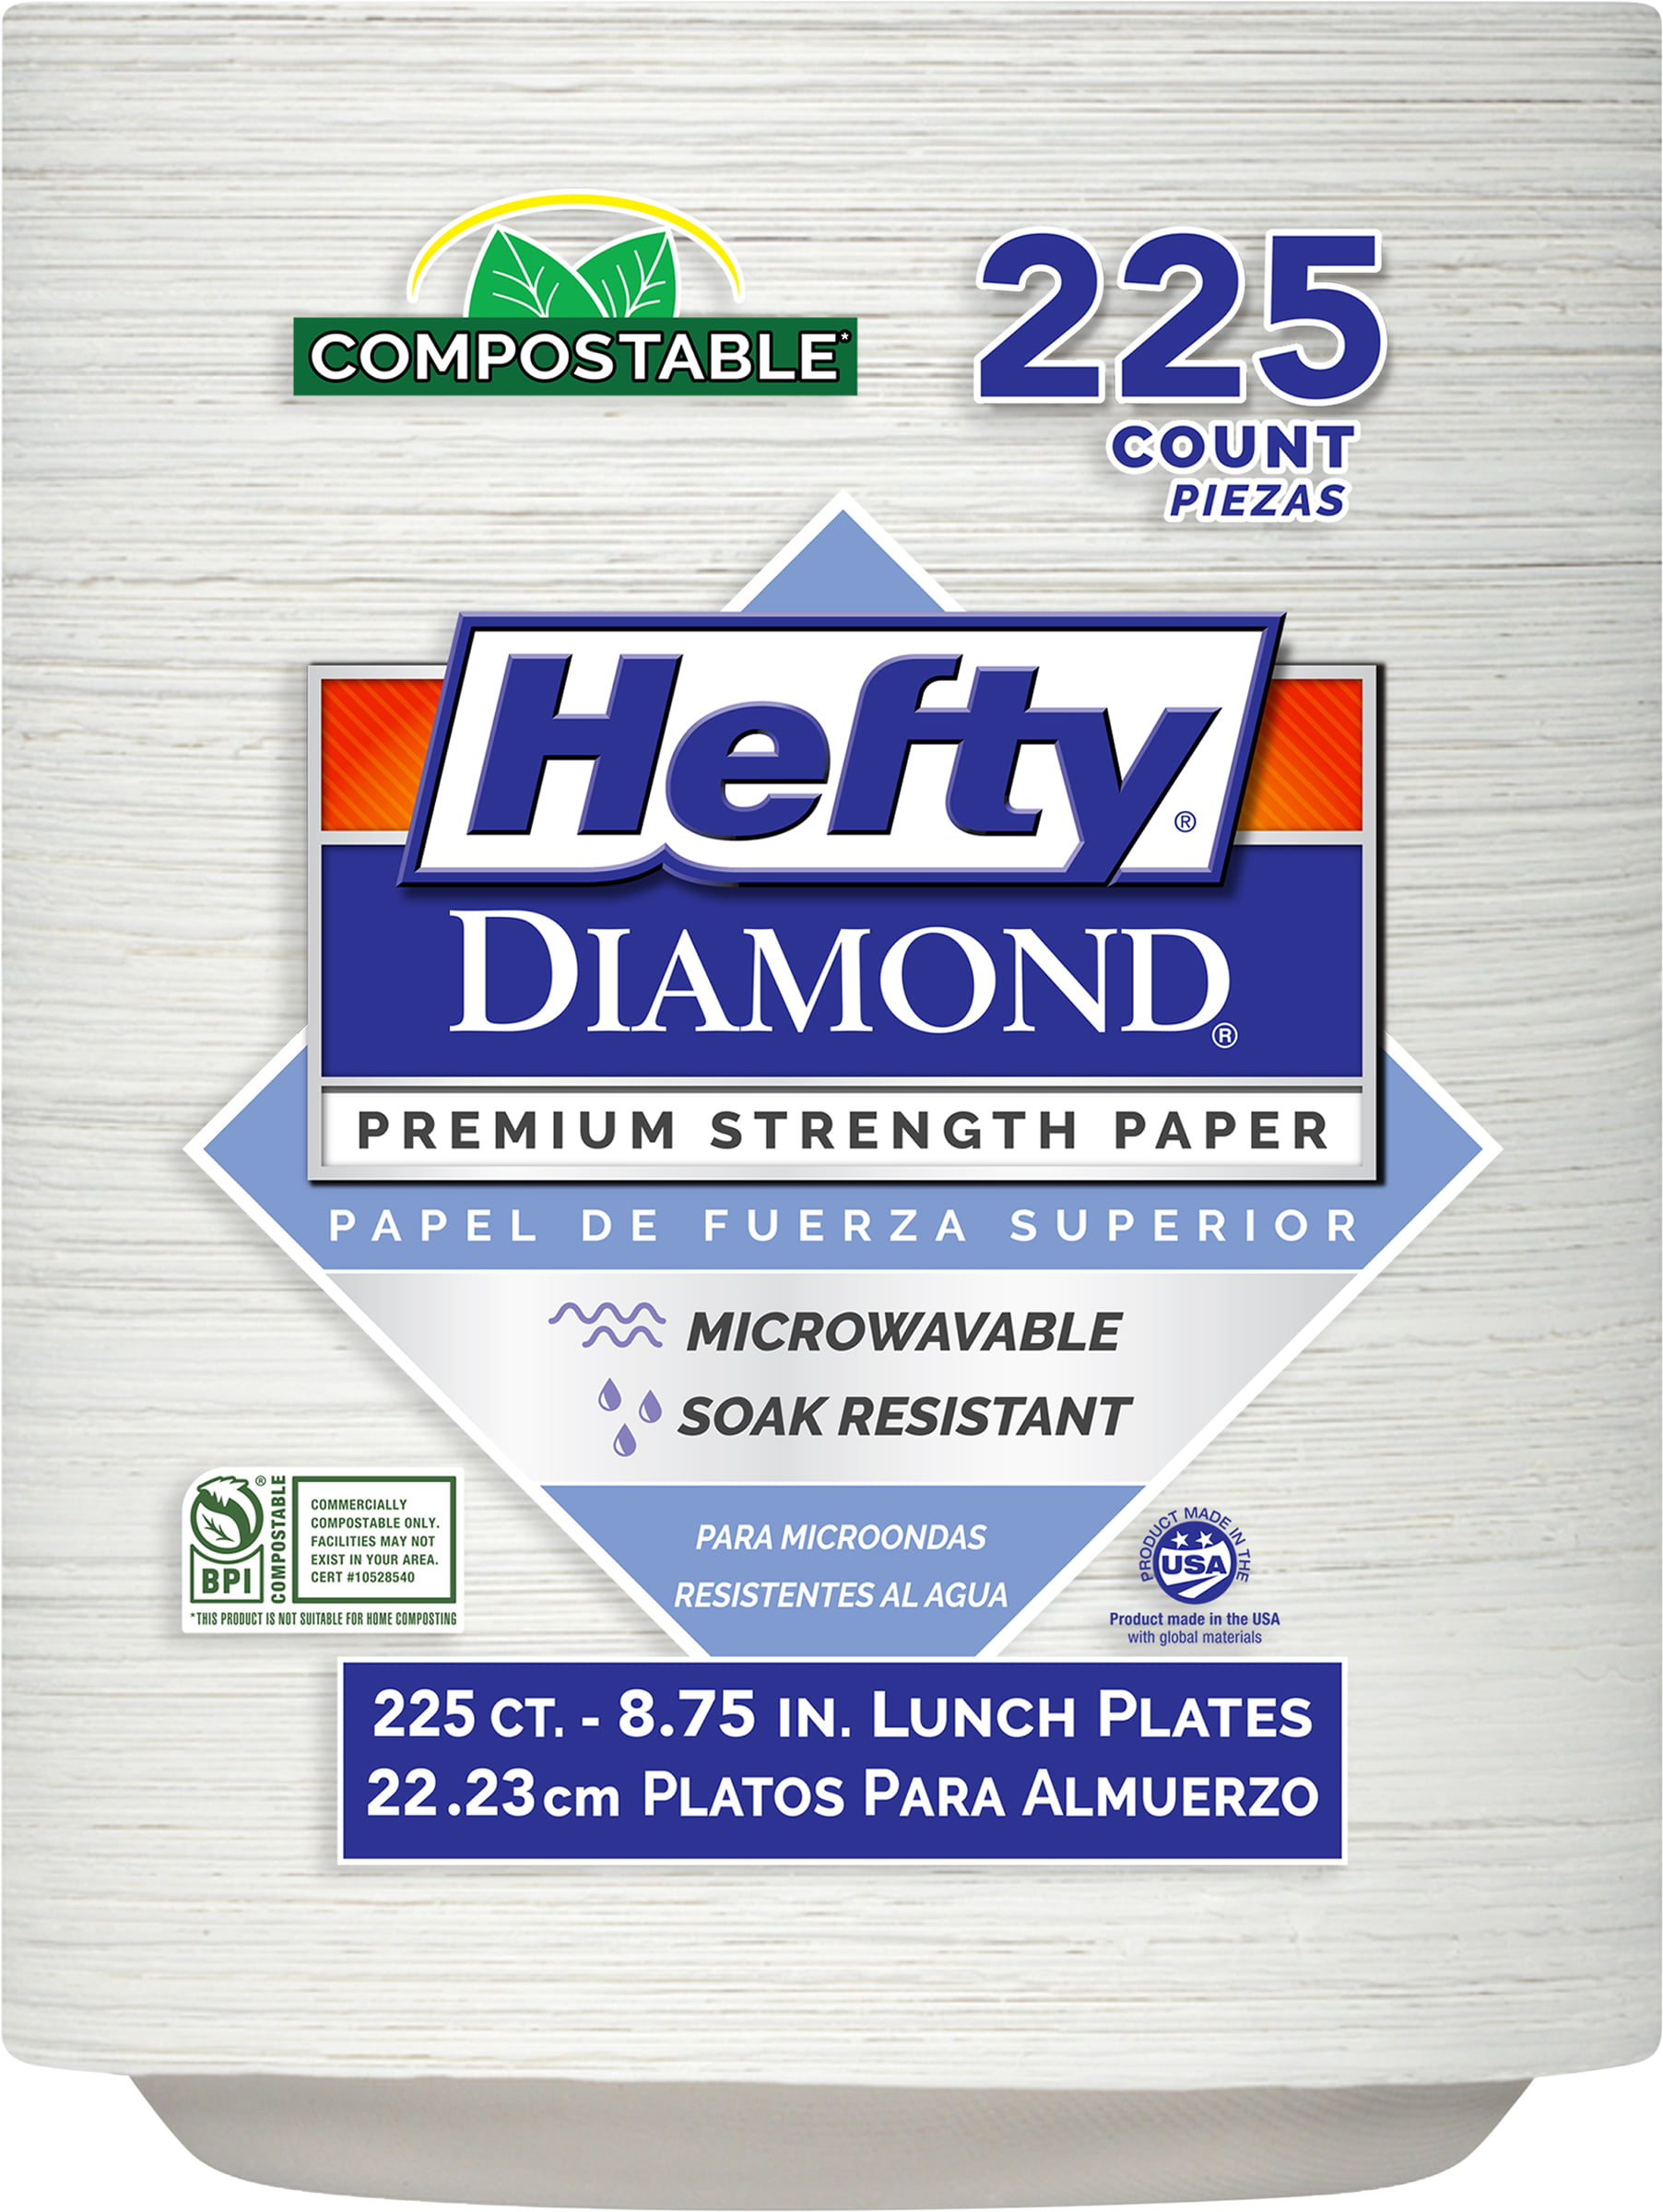 Hefty Diamond Lunch Plates, 225-count